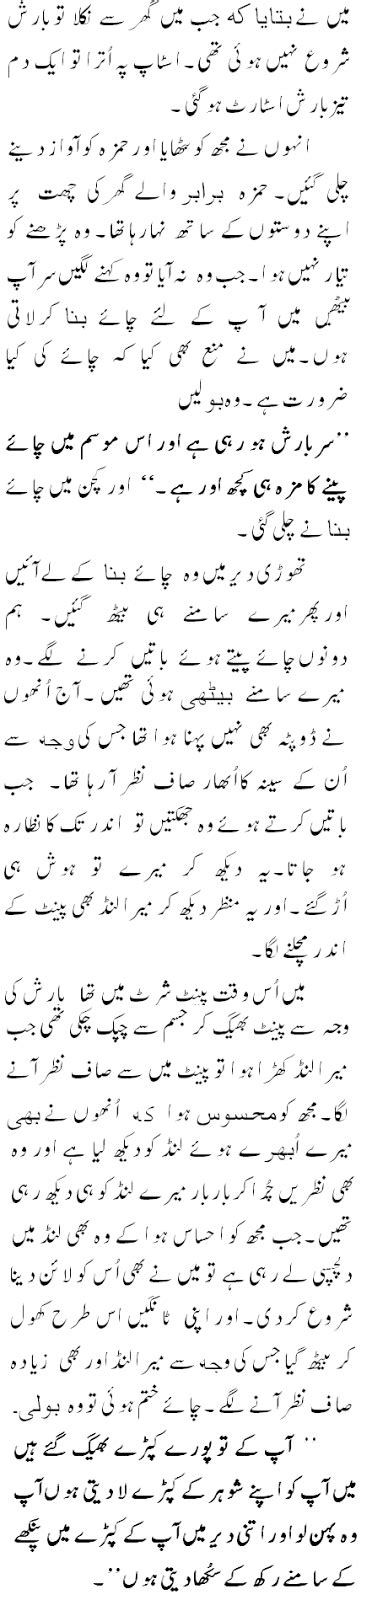 Urdu Fount Ma Fozia Ki Chudai Pakistani Sachi Kahani Golmaal Story Book